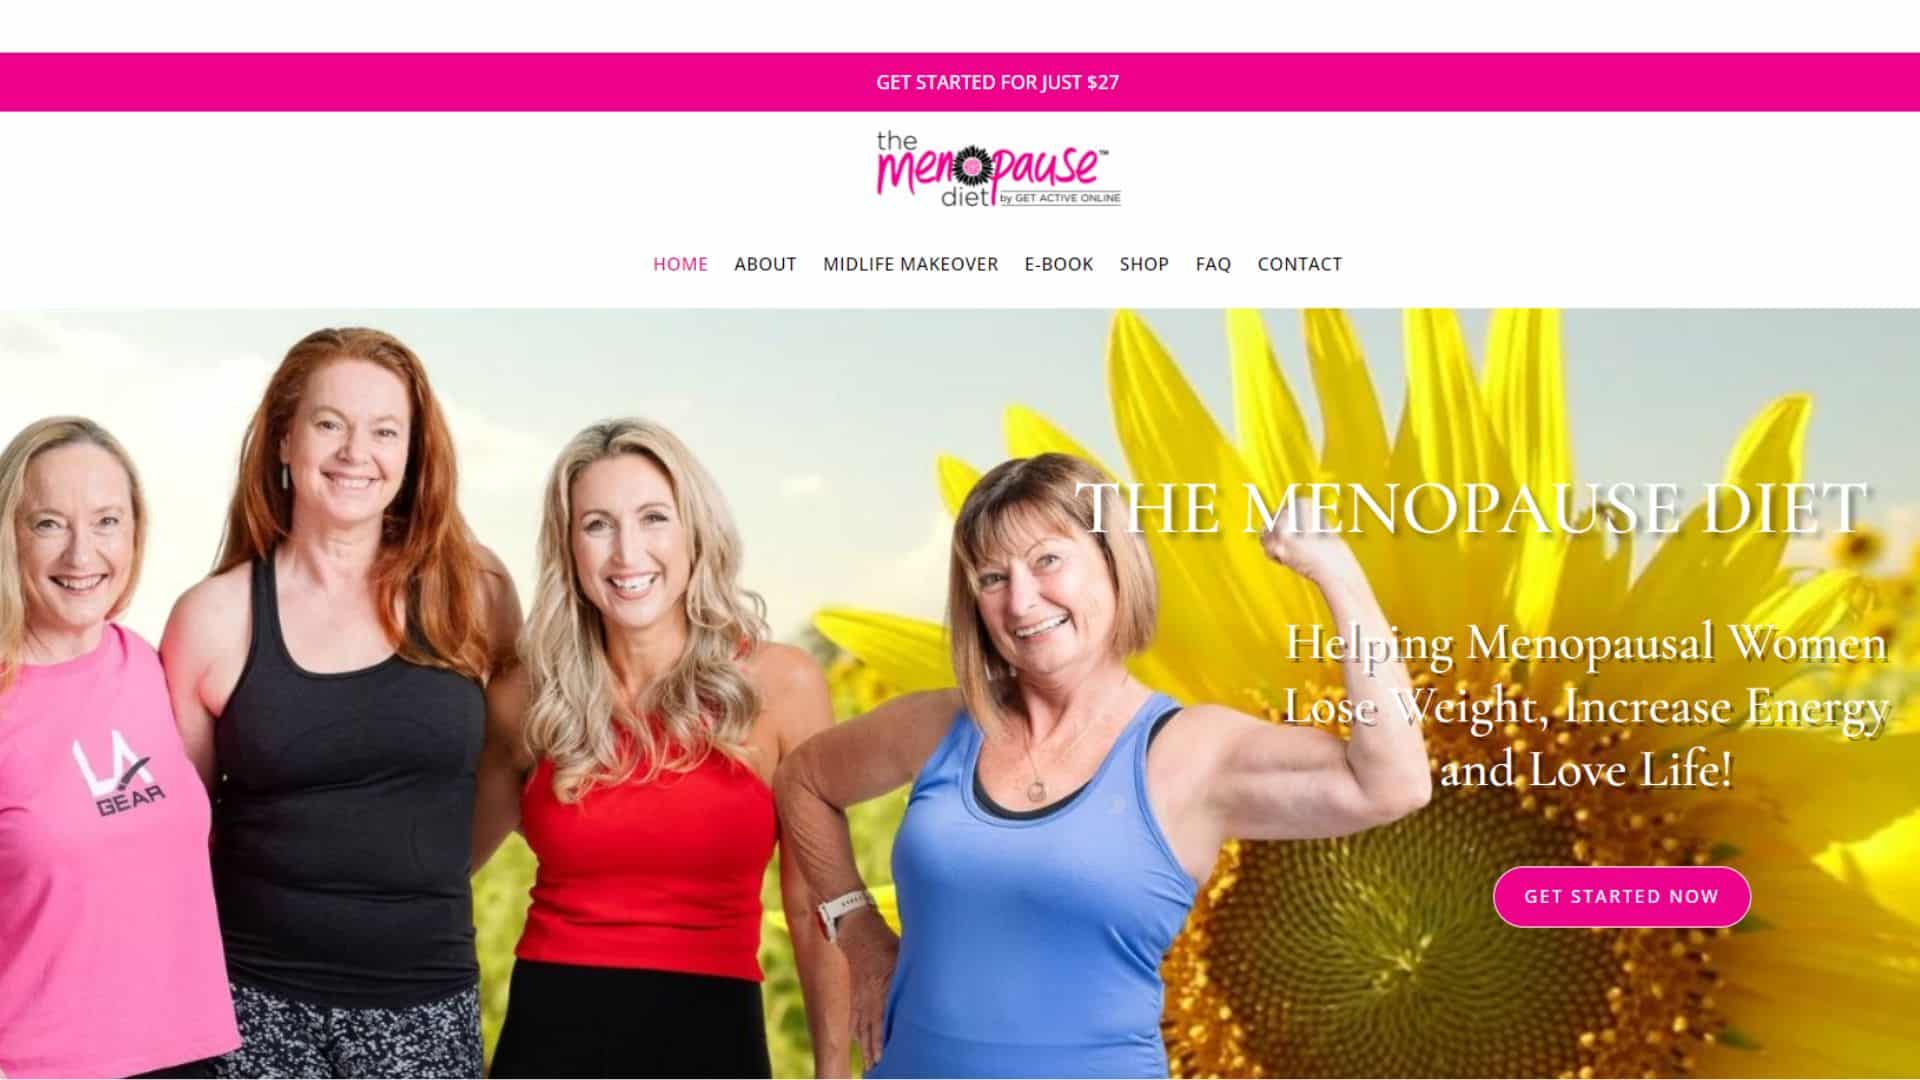 The Menopause diet woocommerce ecommerce website design